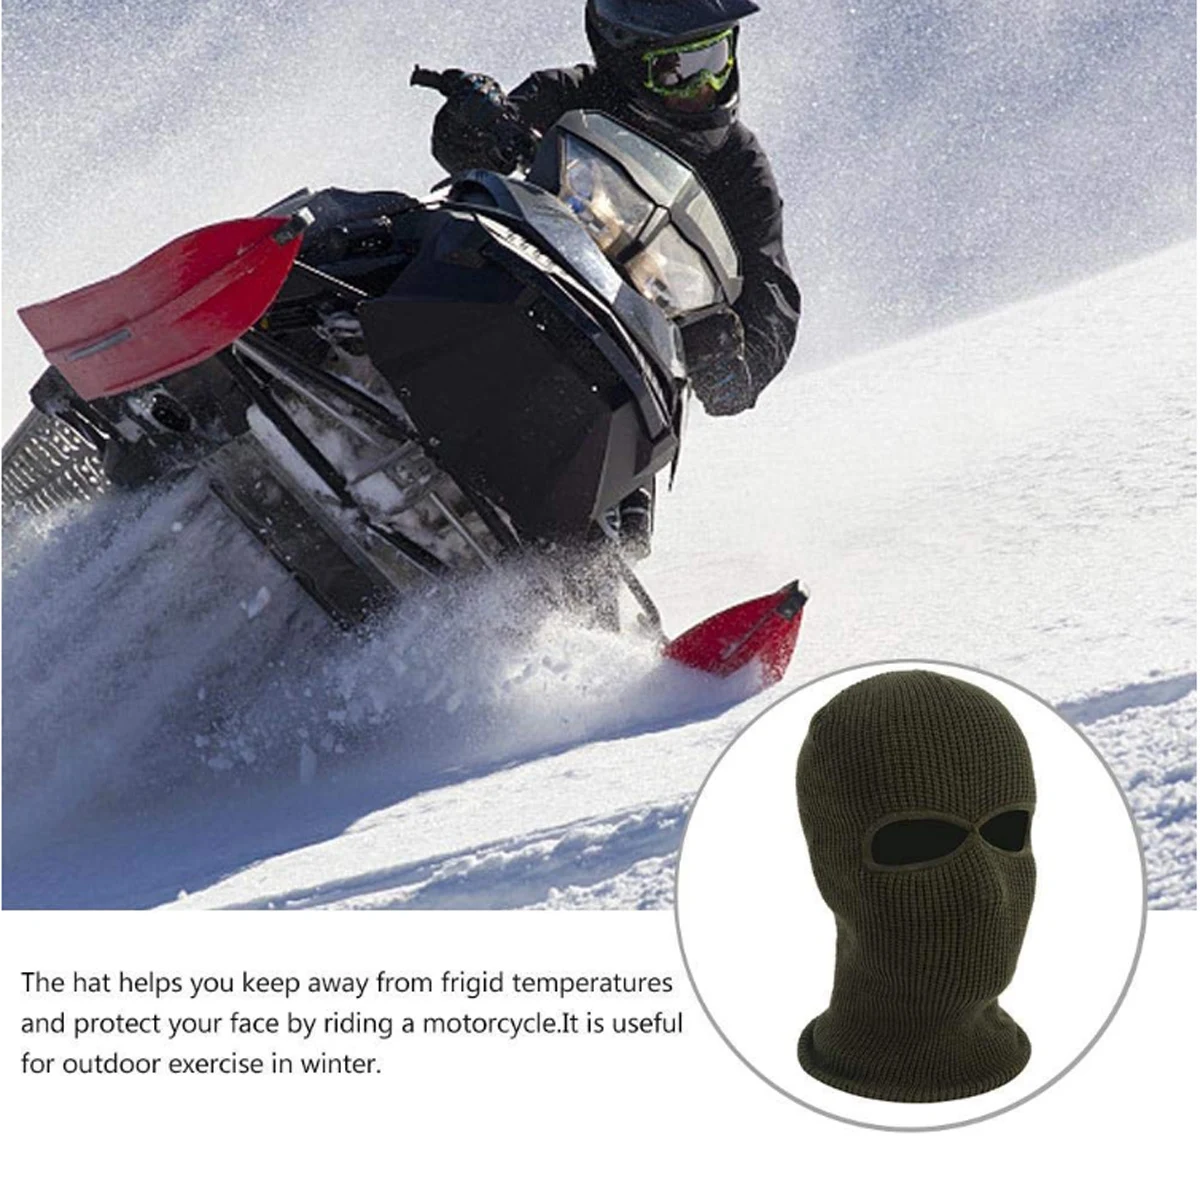 Зимняя женская мужская мотоциклетная Лыжная Ветрозащитная маска для лица, Теплая эластичная вязаная маска для лица, Шапка-бини, грелка для шеи